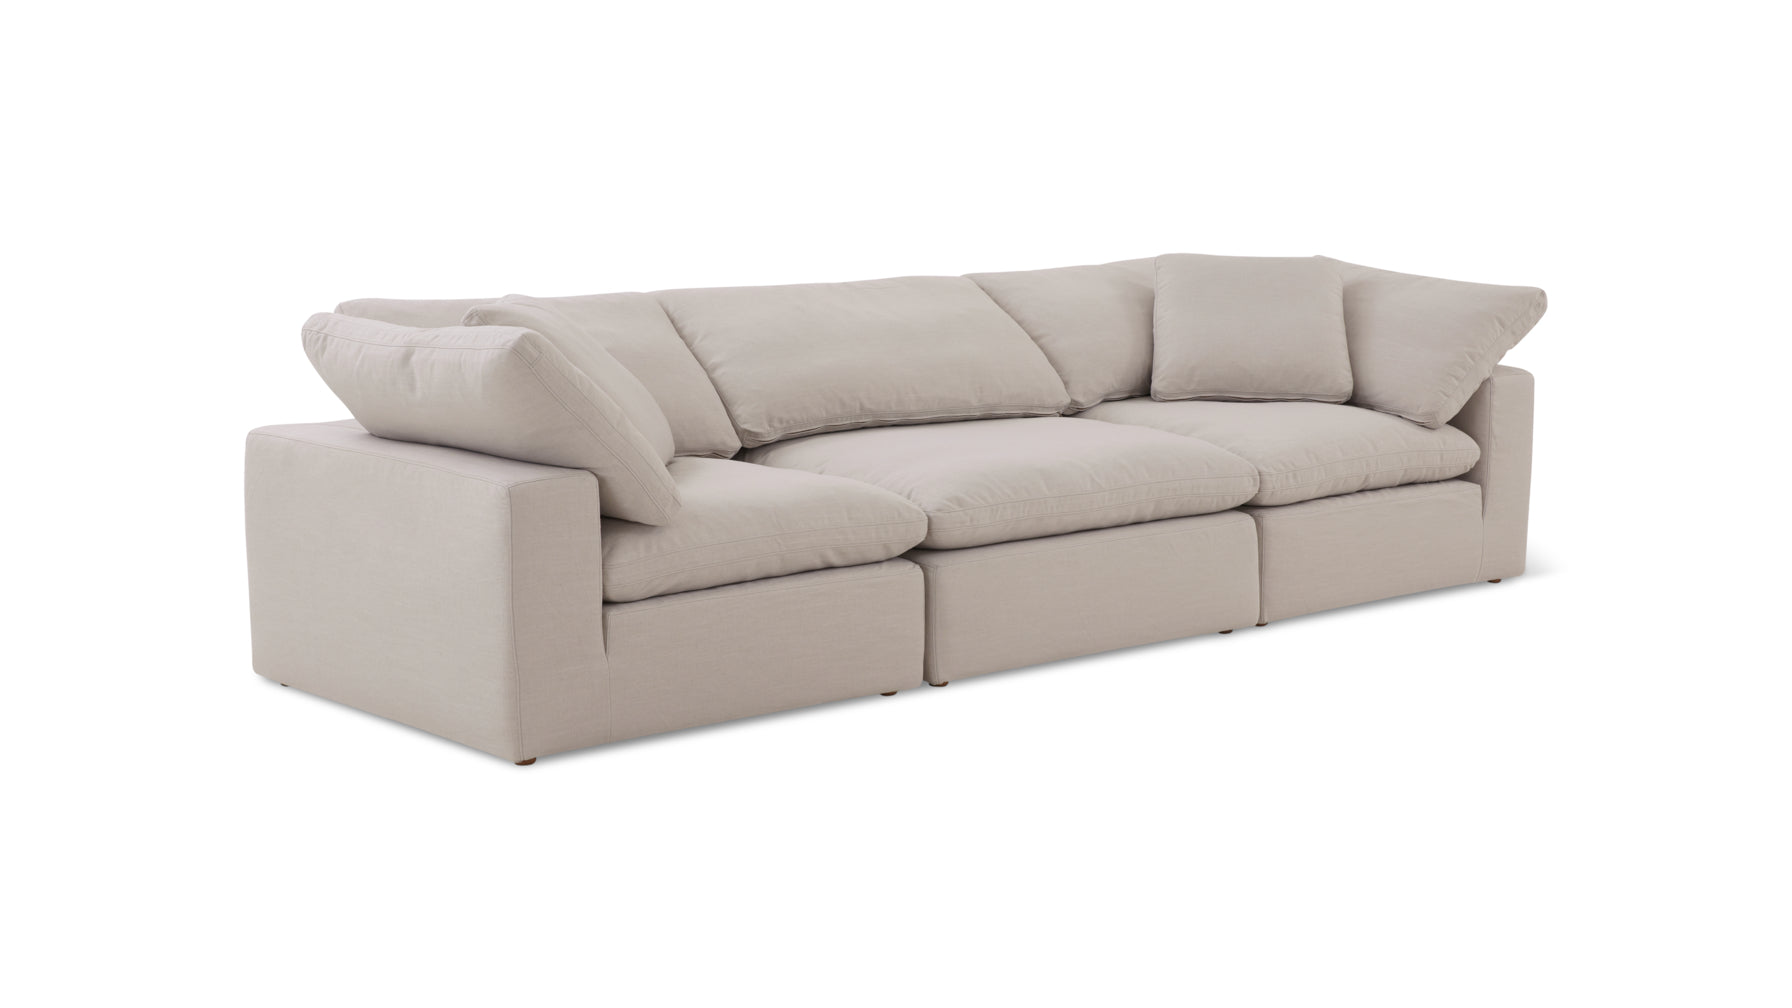 Movie Night™ 3-Piece Modular Sofa, Standard, Clay - Image 2